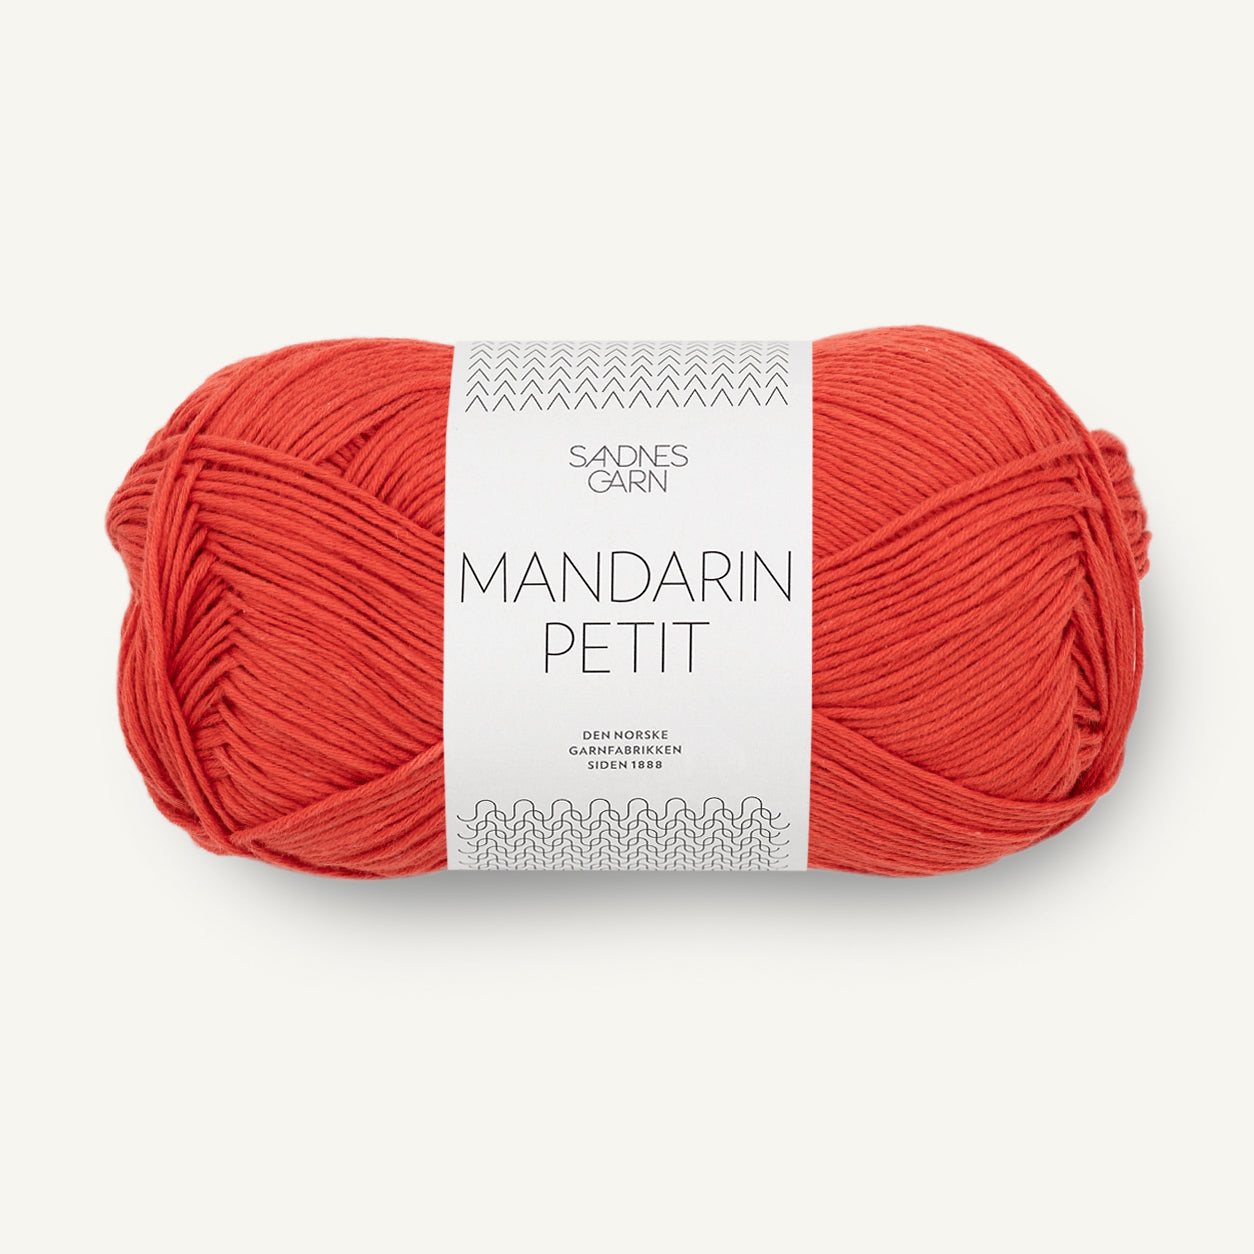 Mandarin Petit scarlet red [4018]